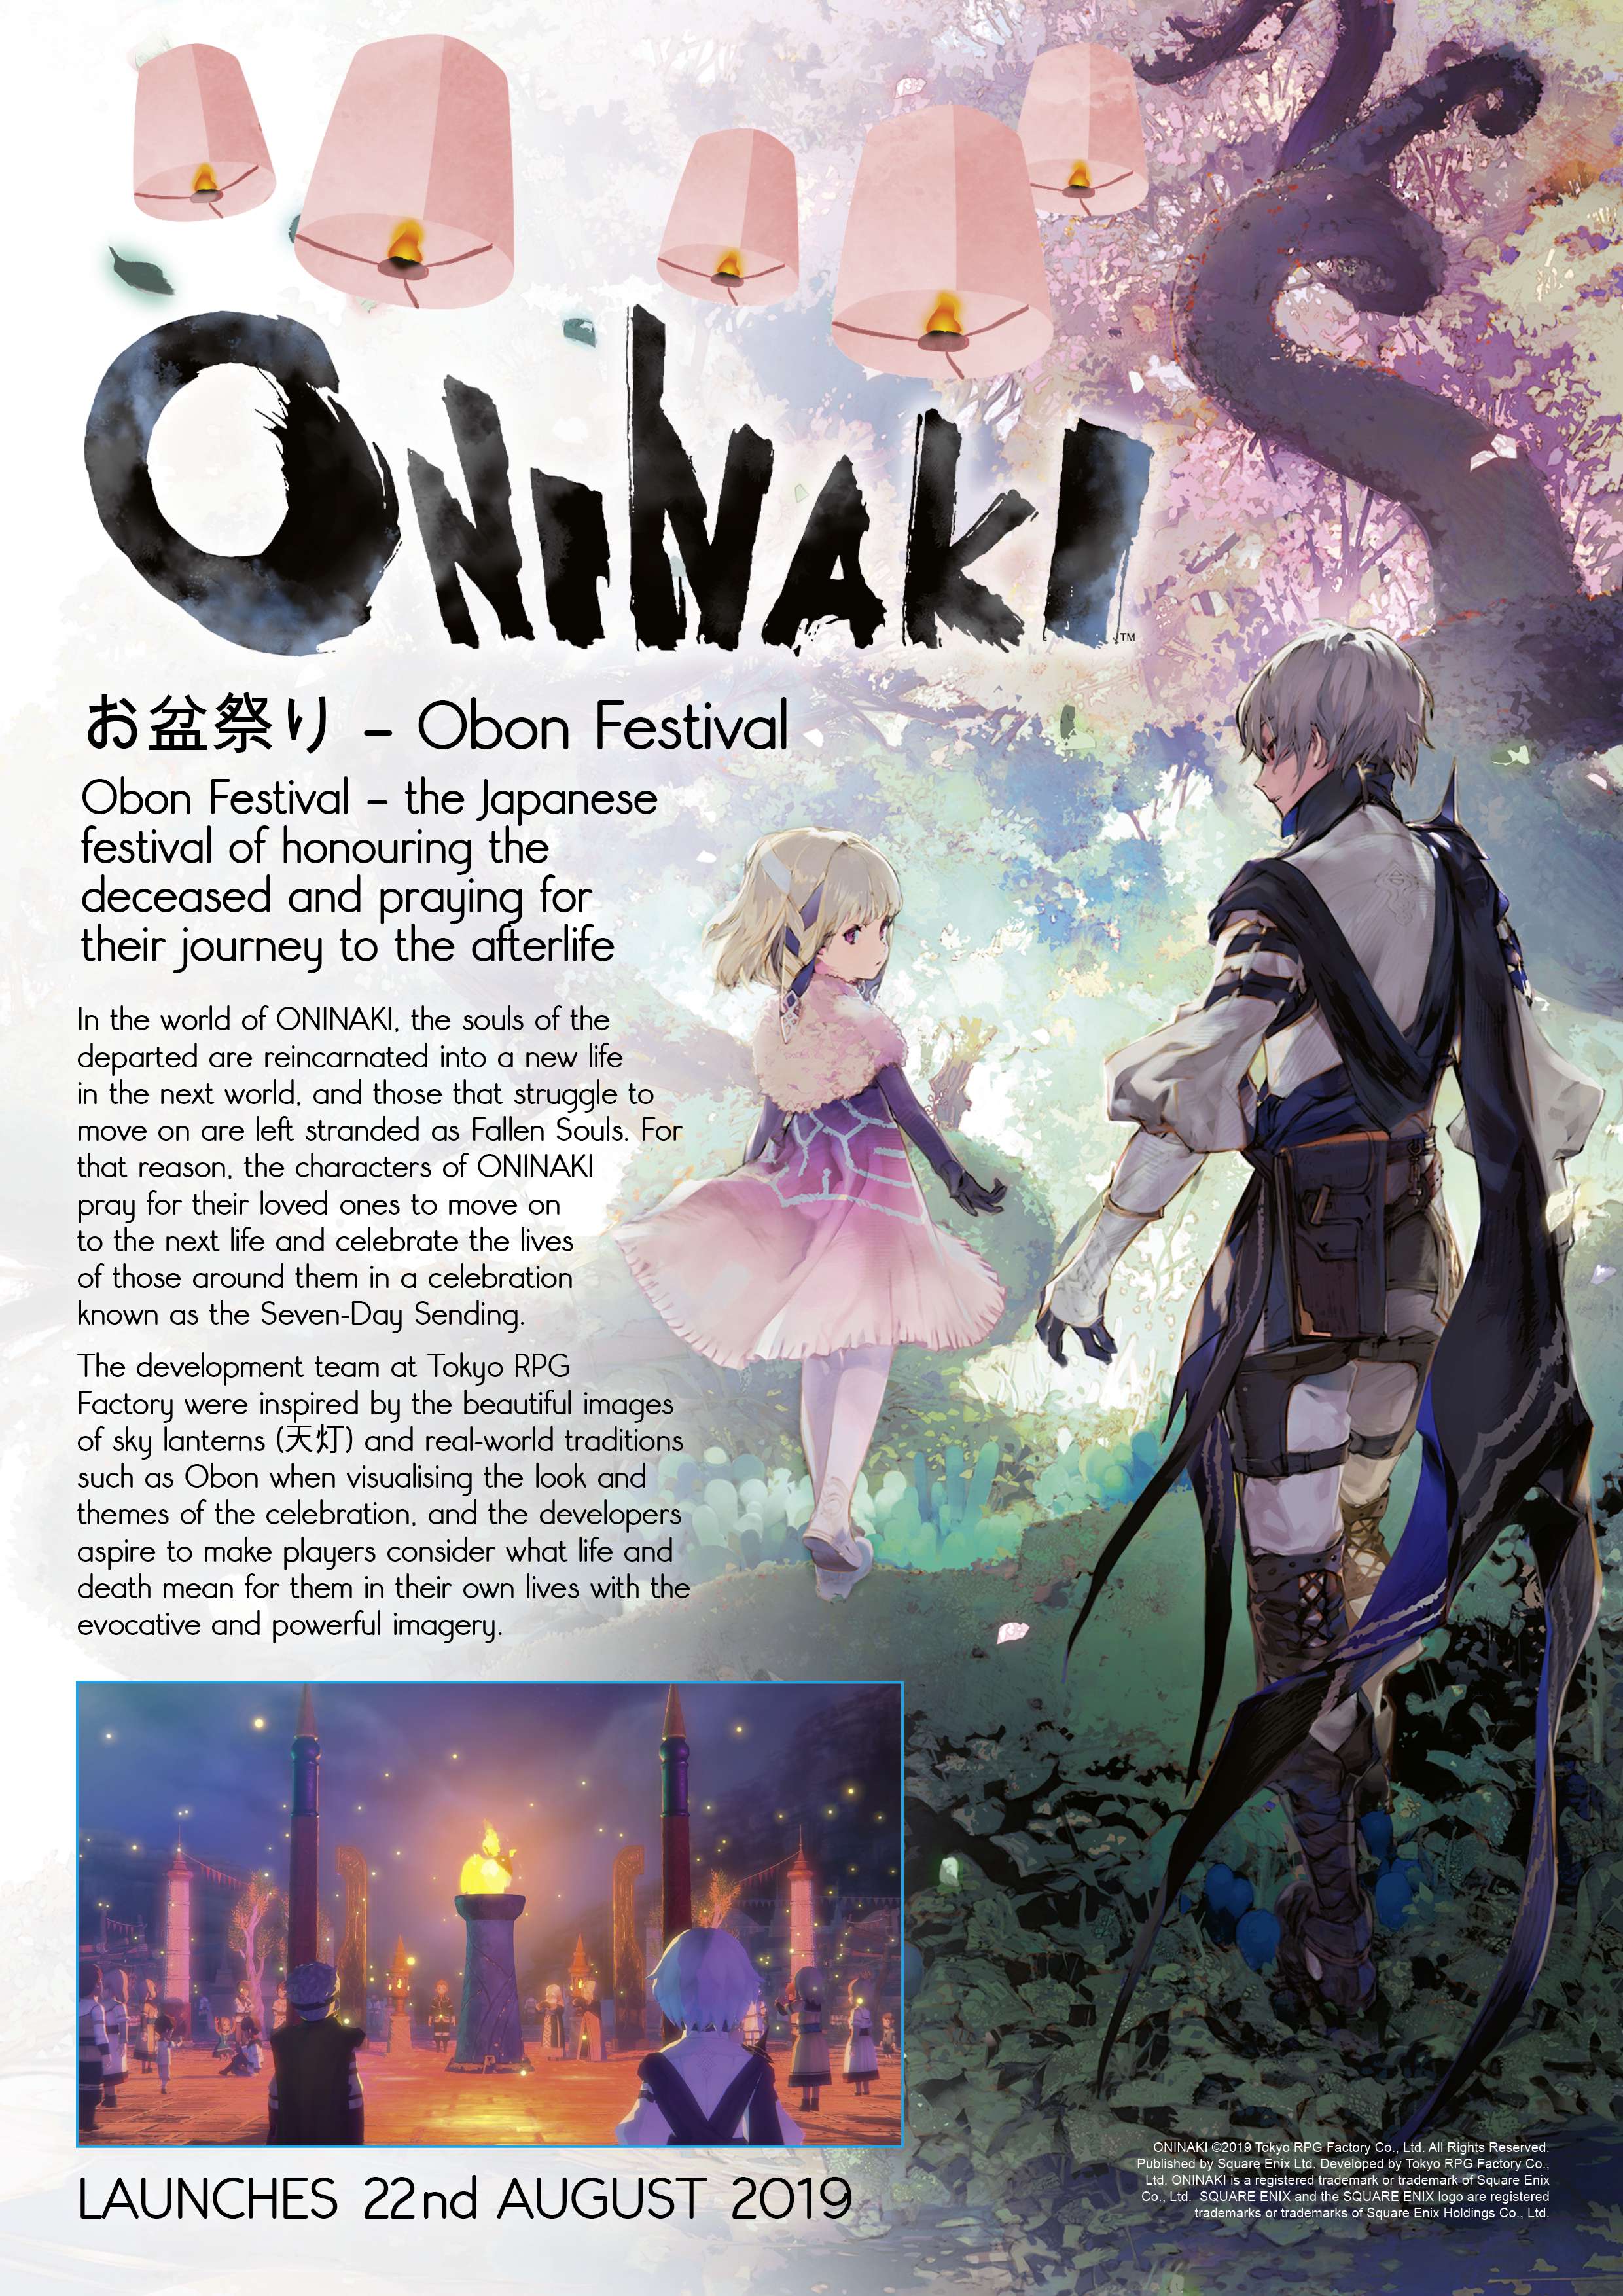 ONINAKI Obon Festival image